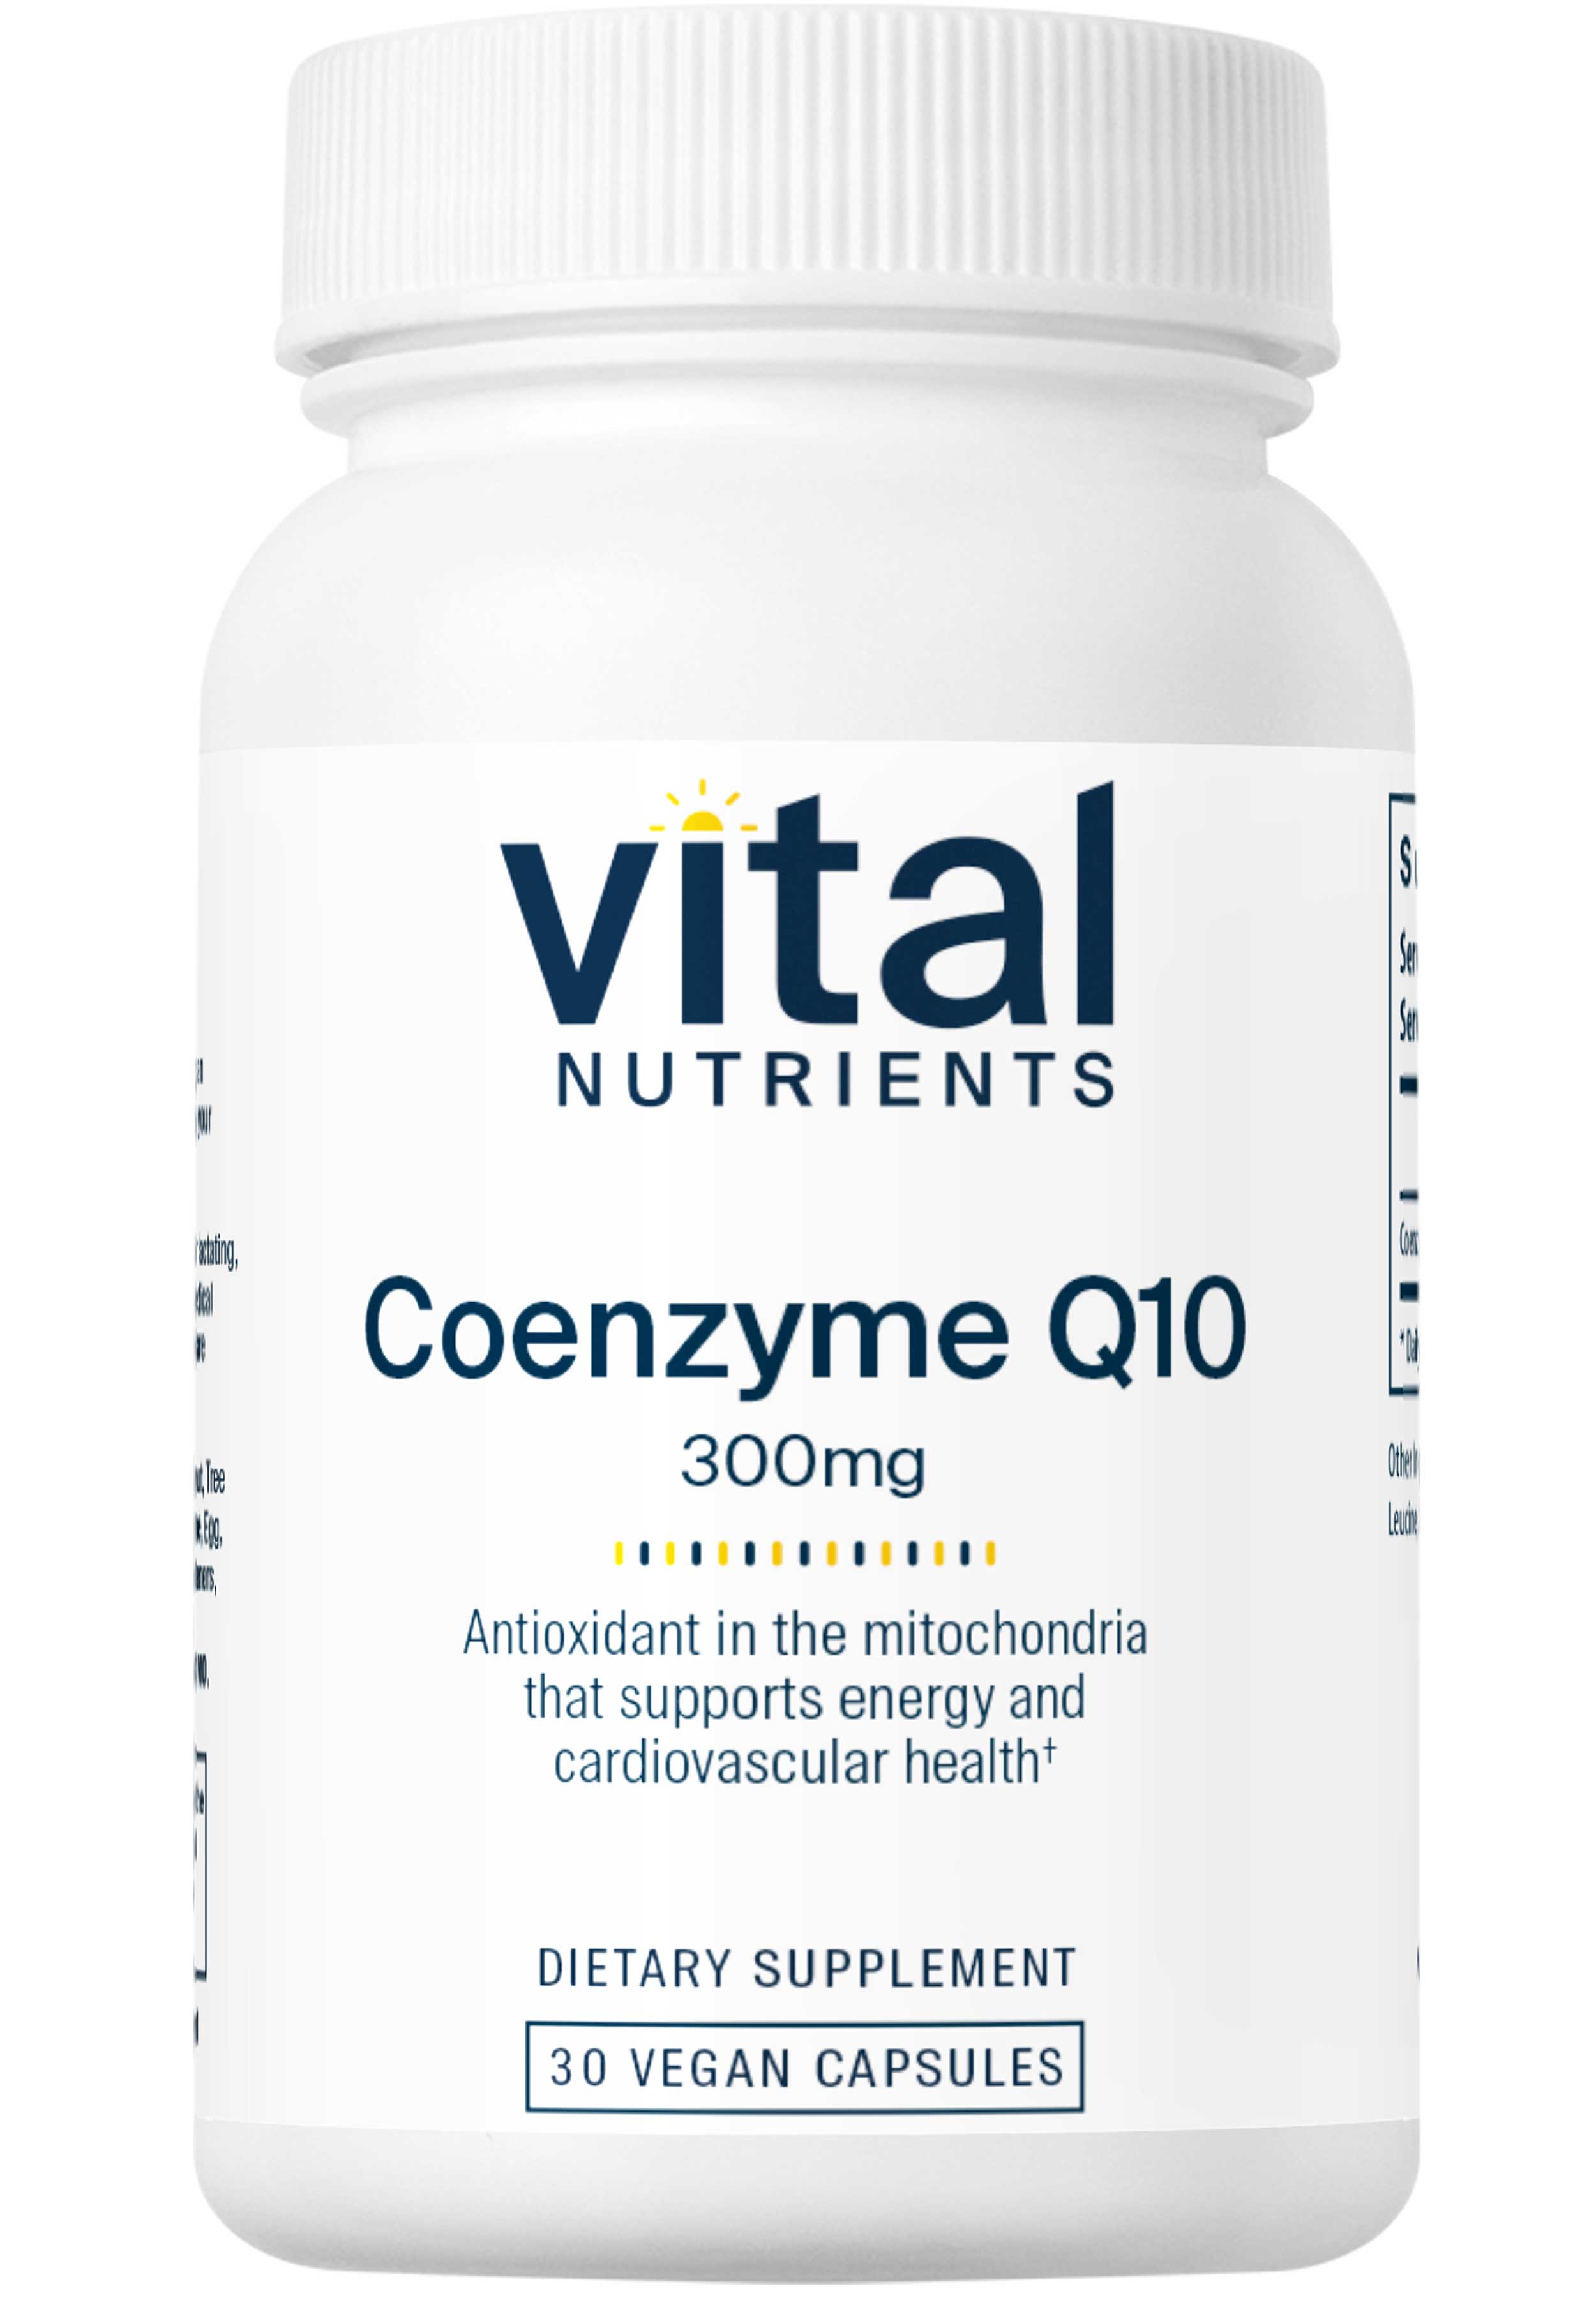 Vital Nutrients CoEnzyme Q10 300mg